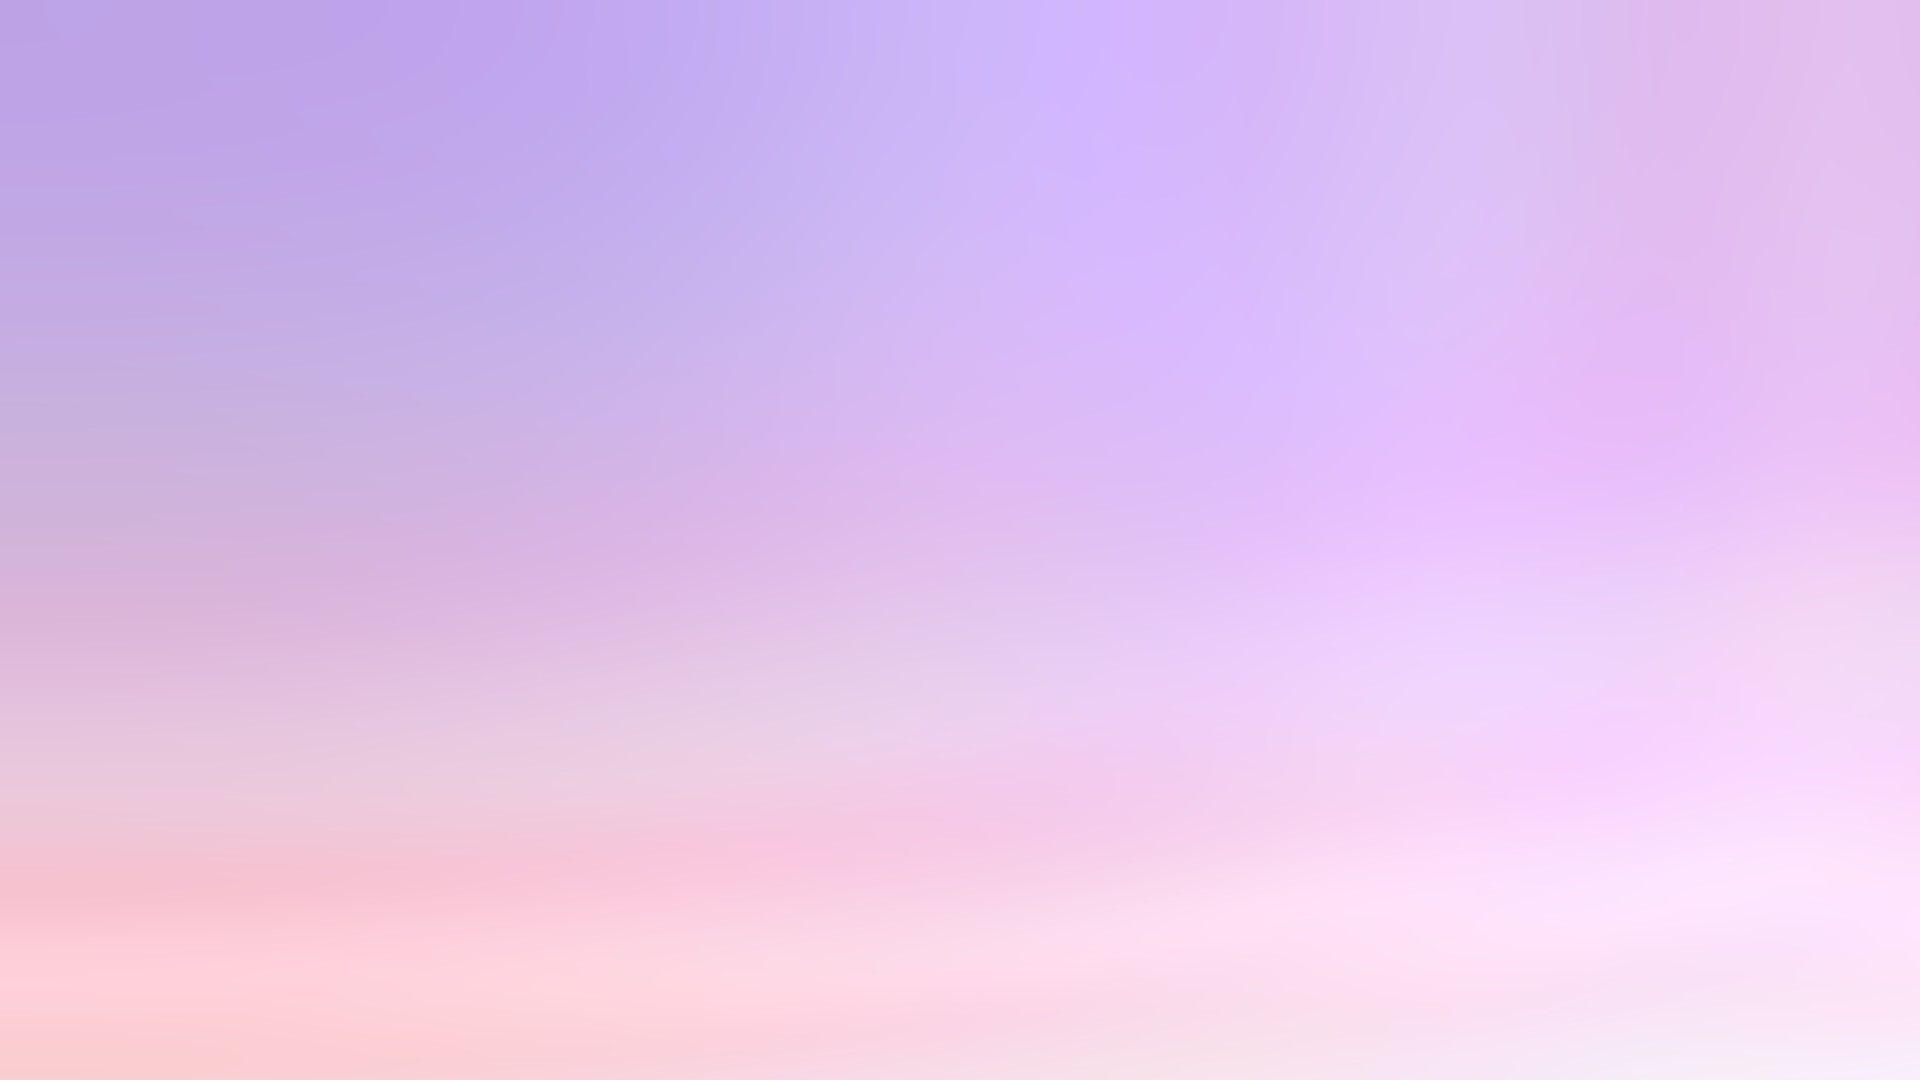 Light Pink Polka Dot Background Tumblr. Cool Cute Polka Dot